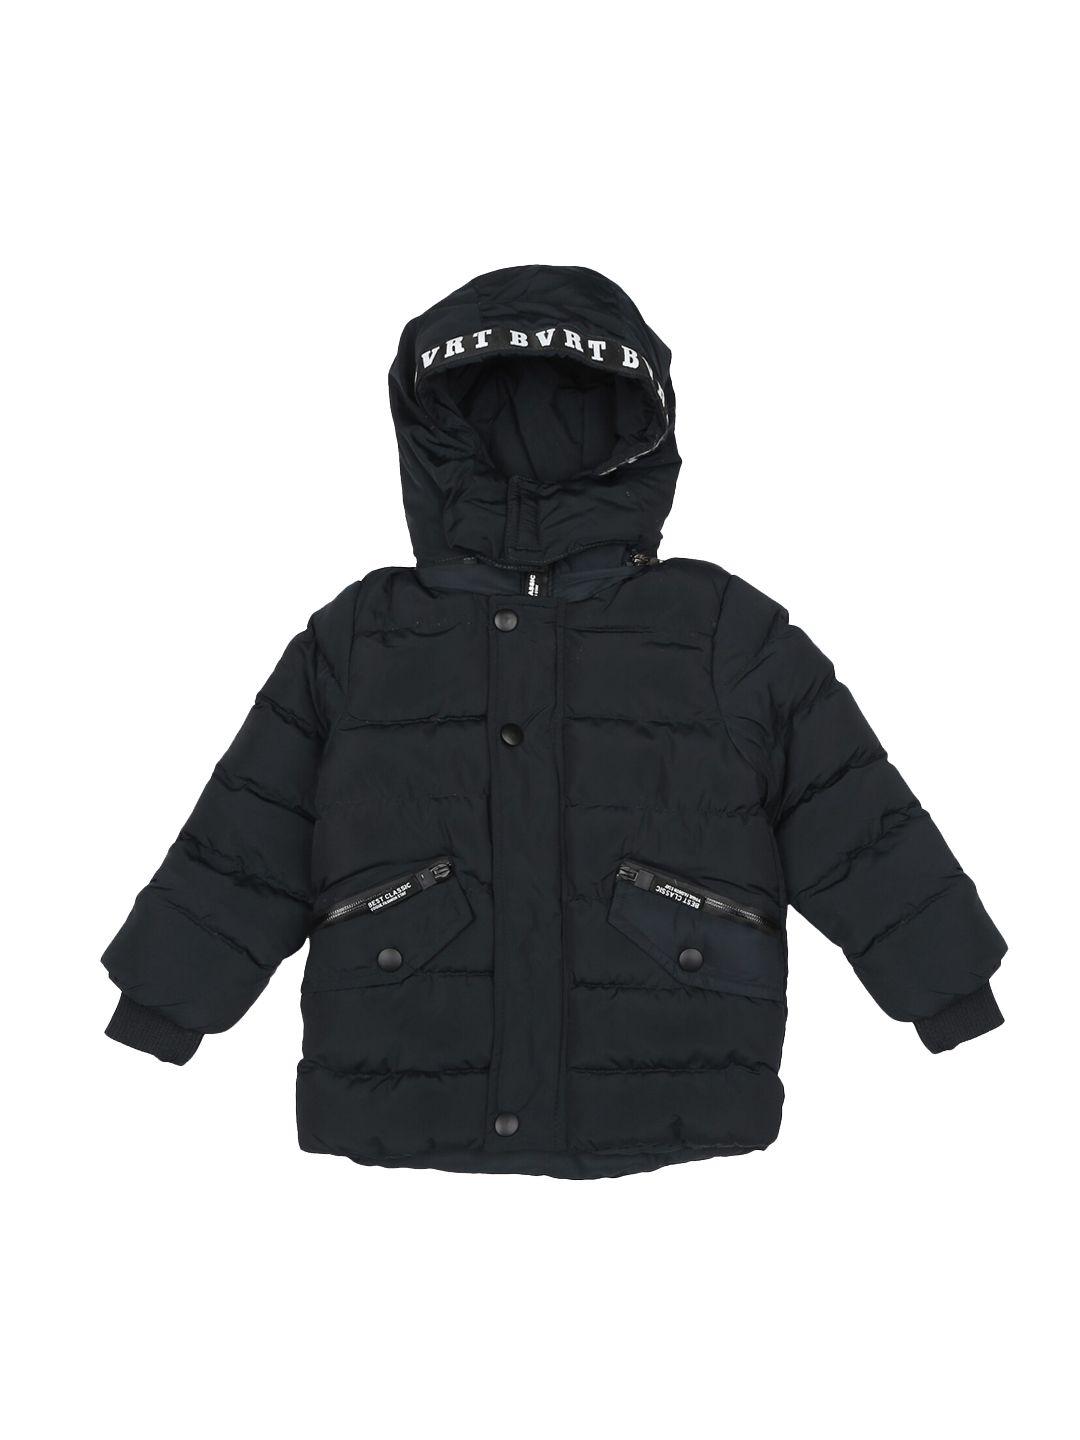 mothercare boys black longline parka jacket